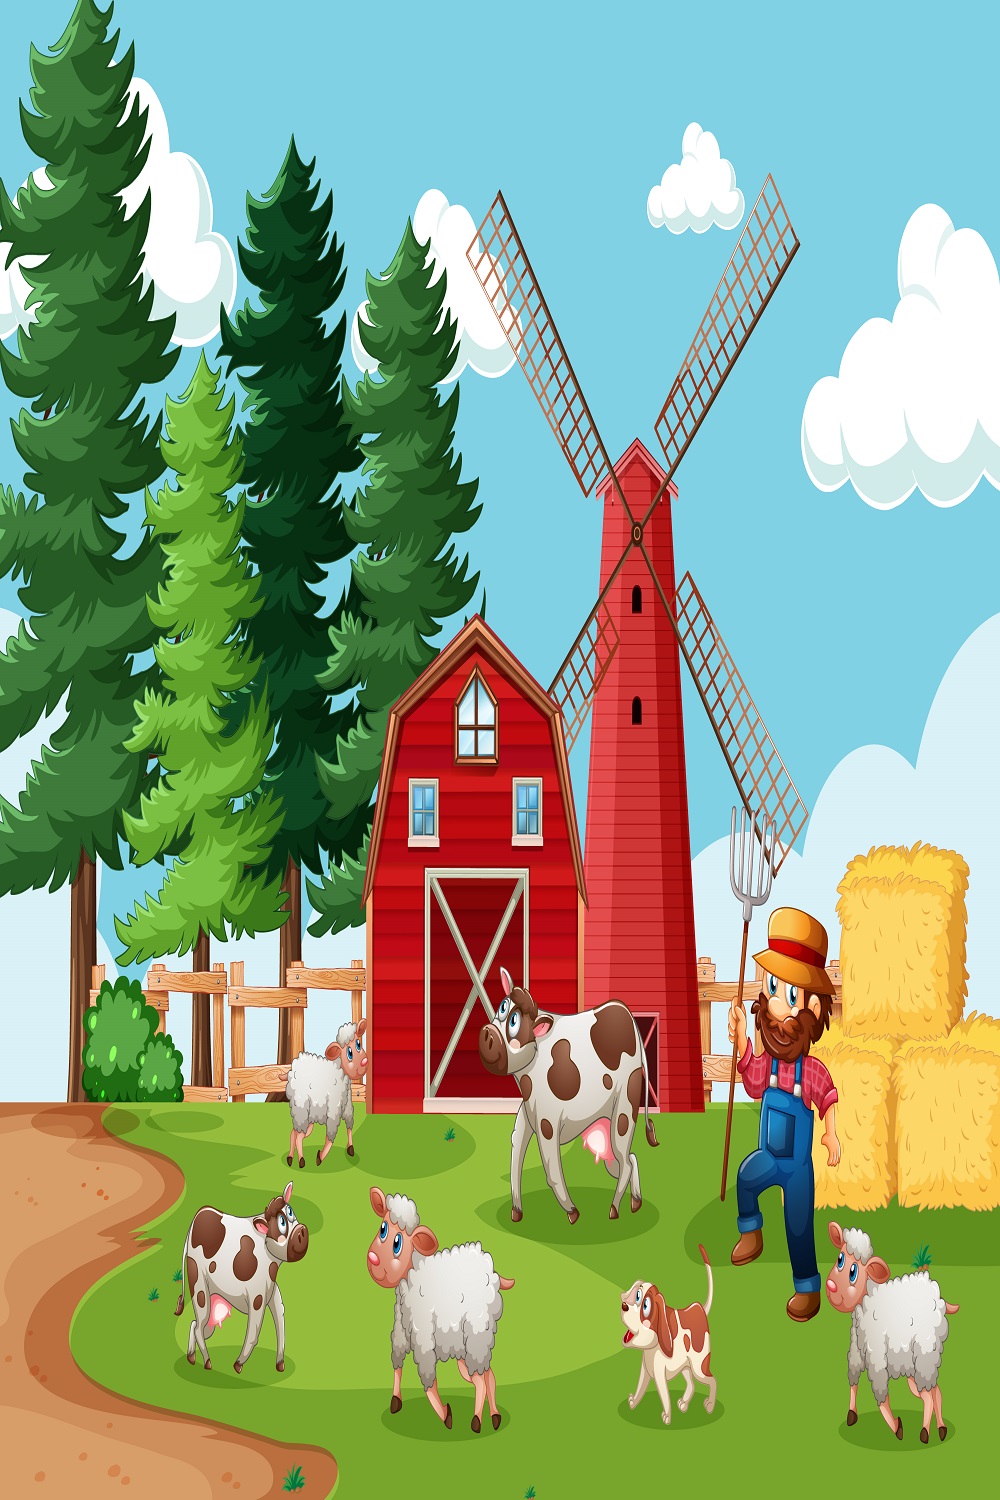 Farmer with animal farm farm scene cartoon style pinterest preview image.